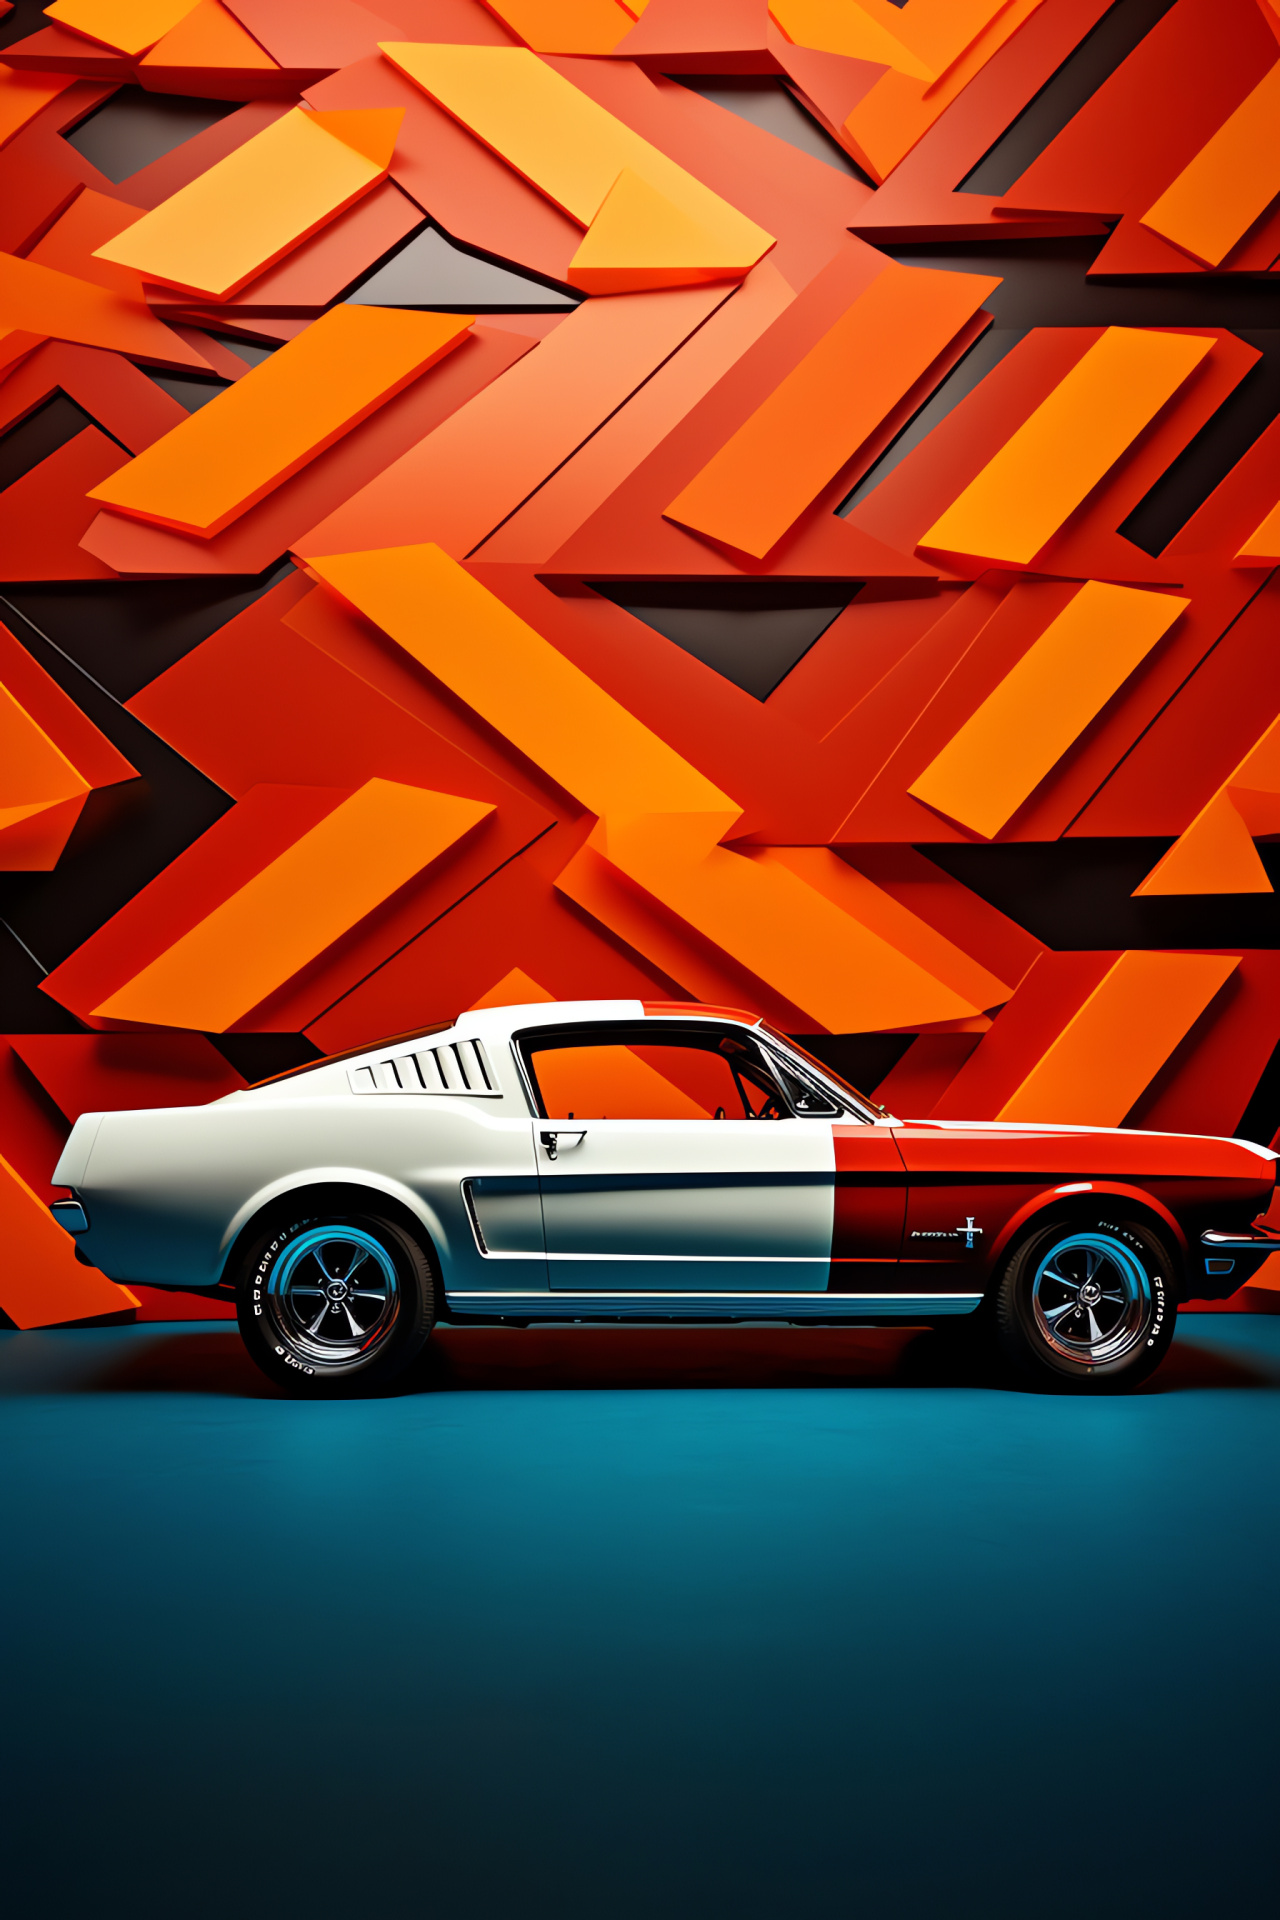 Classic Mustang, Geometric backdrop creativity, Automotive contrast, Artistic presentation, Car side profile, HD Phone Image